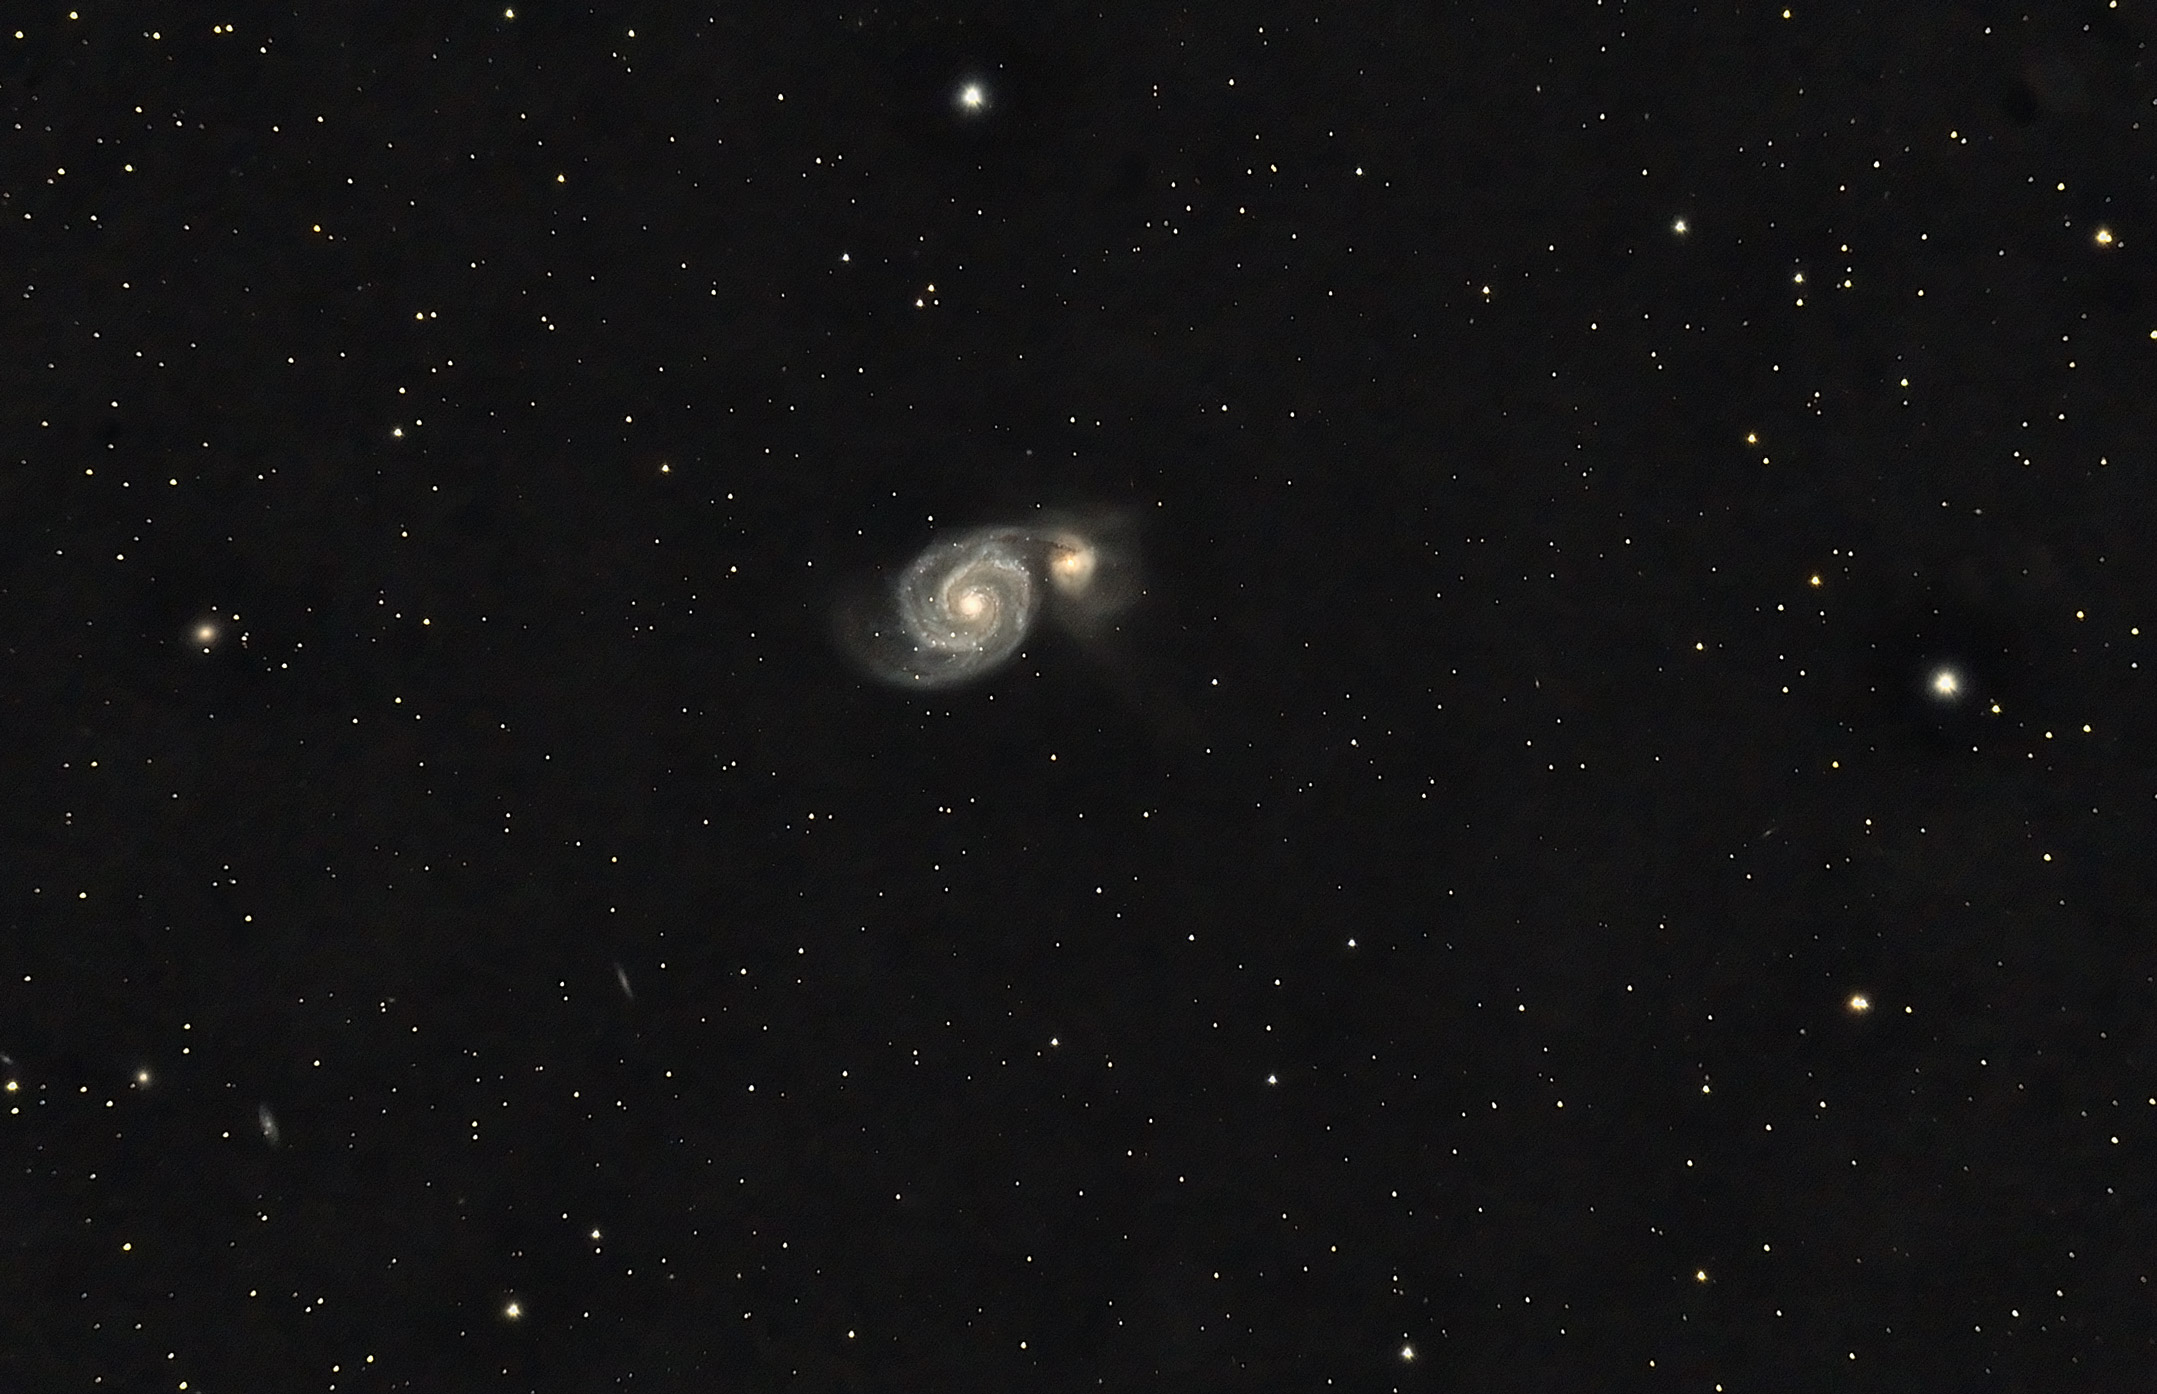 M51 - The Whirlpool Galaxy